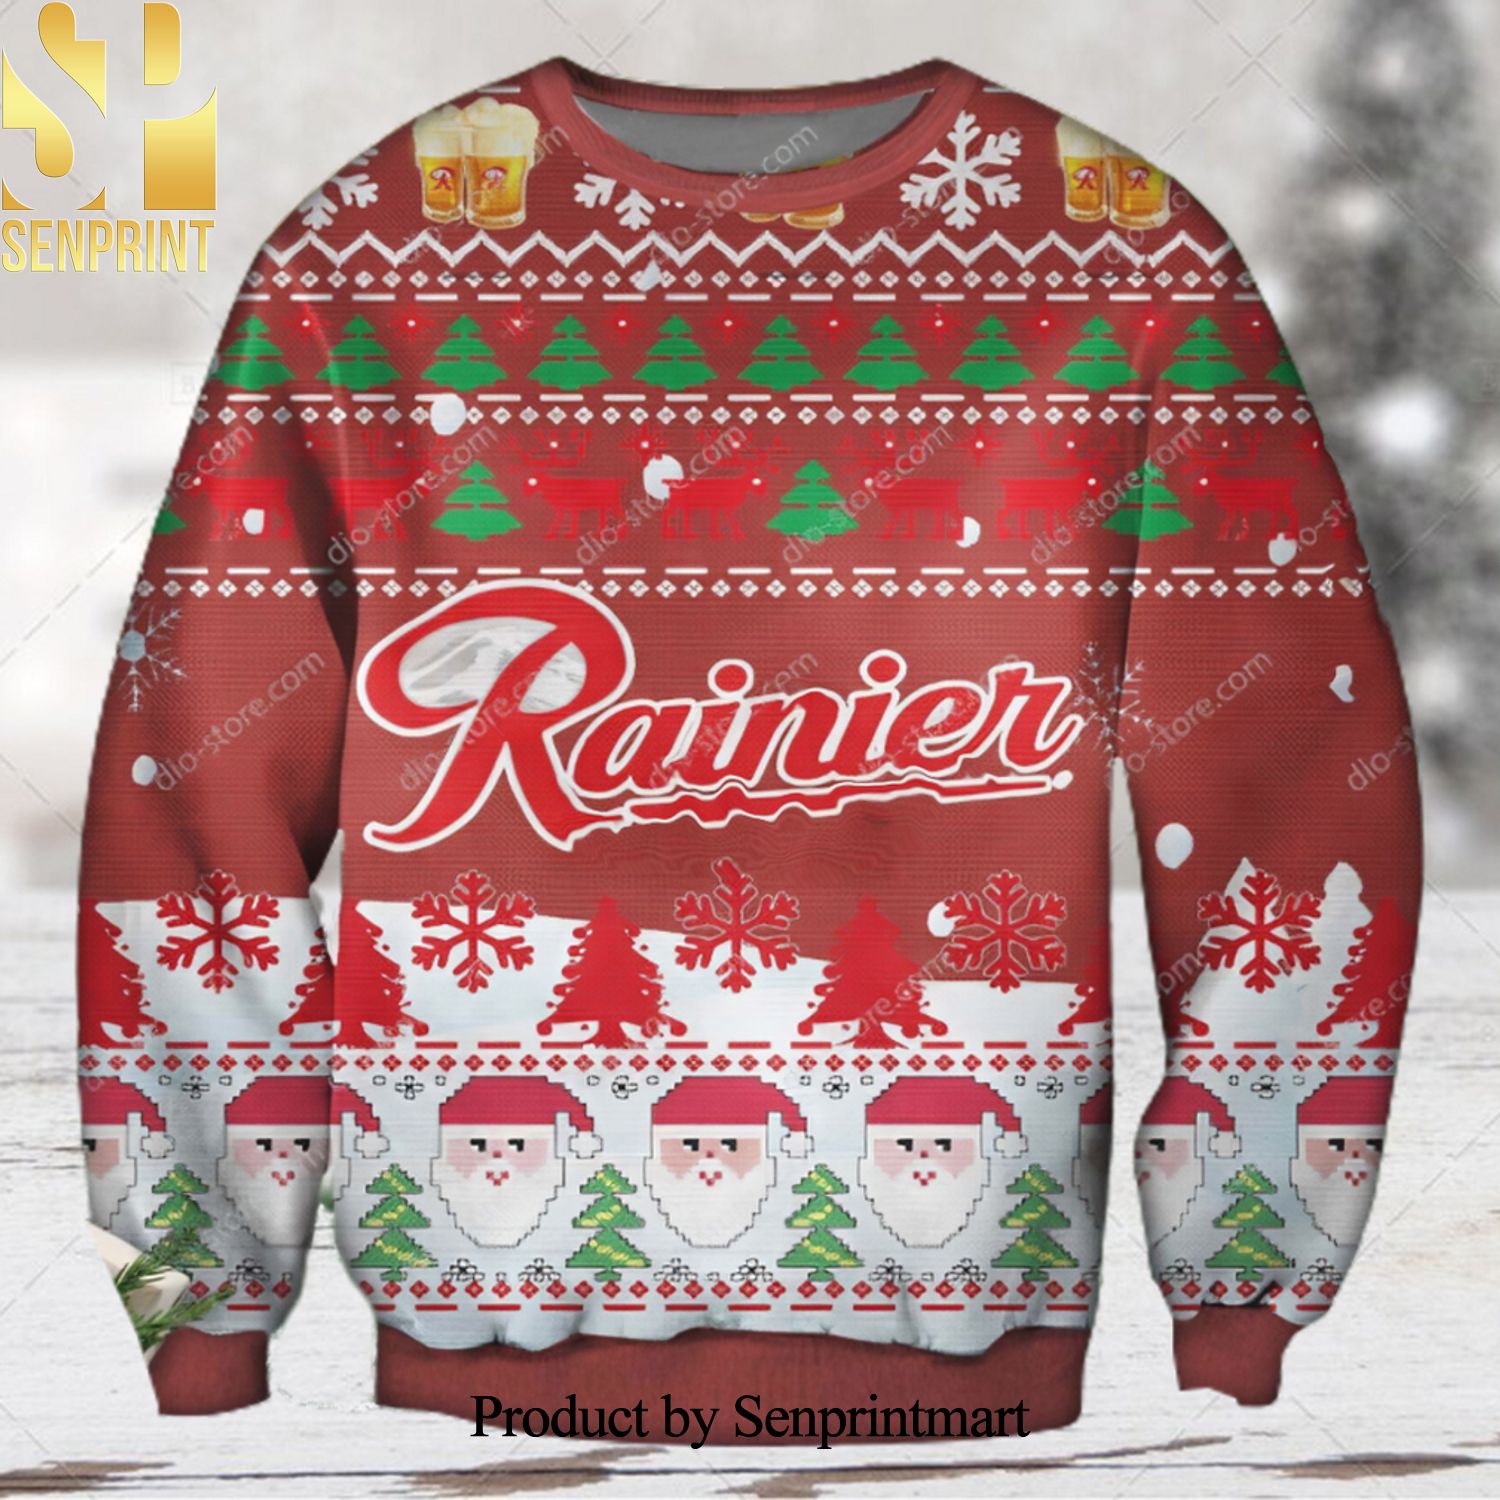 Rainier Beer Santa Claus Ugly Christmas Wool Knitted Sweater